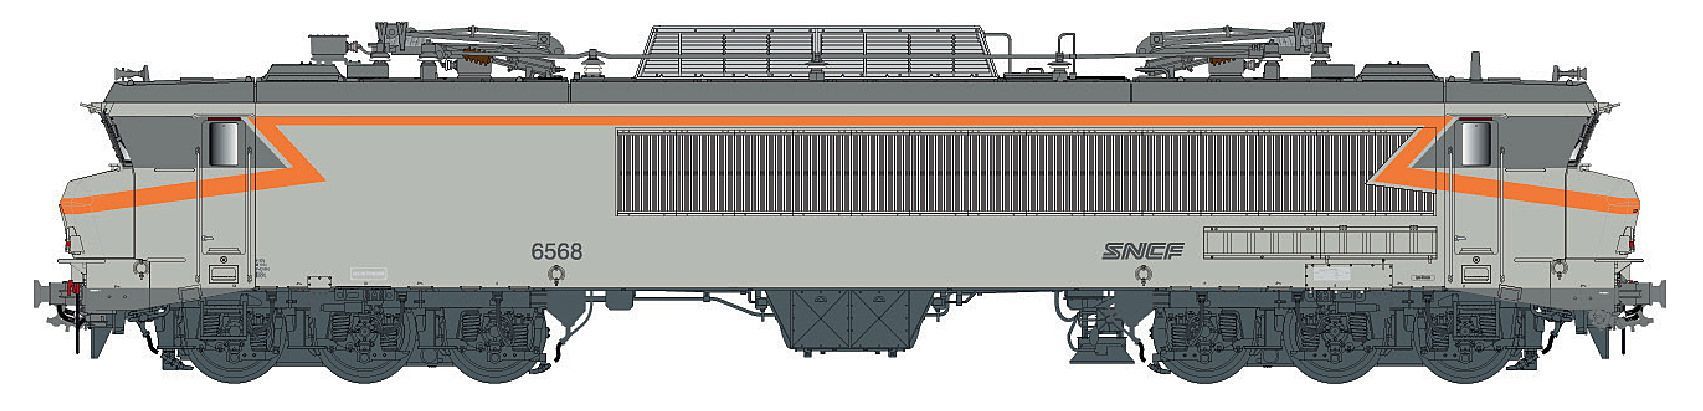 LS Models 10833S - E-Lok CC 6568 SNCF Ep.IV/V grau orange Streifen Nudellogo H0/WS Sound